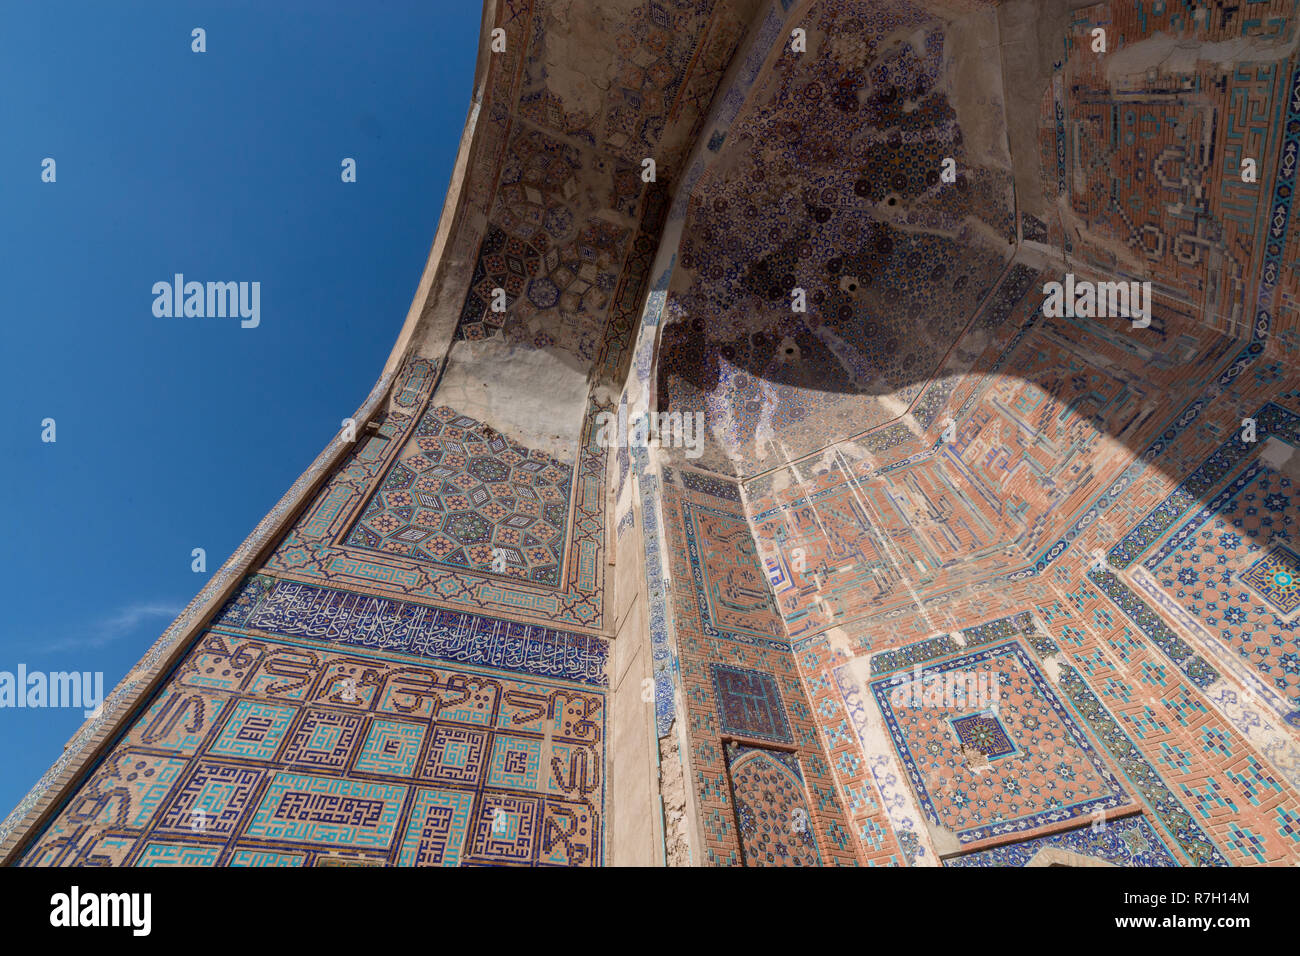 Dettaglio dell'architettura del Santuario di Khwaja Abdullah Ansari, Herat, provincia di Herat, Afghanistan Foto Stock